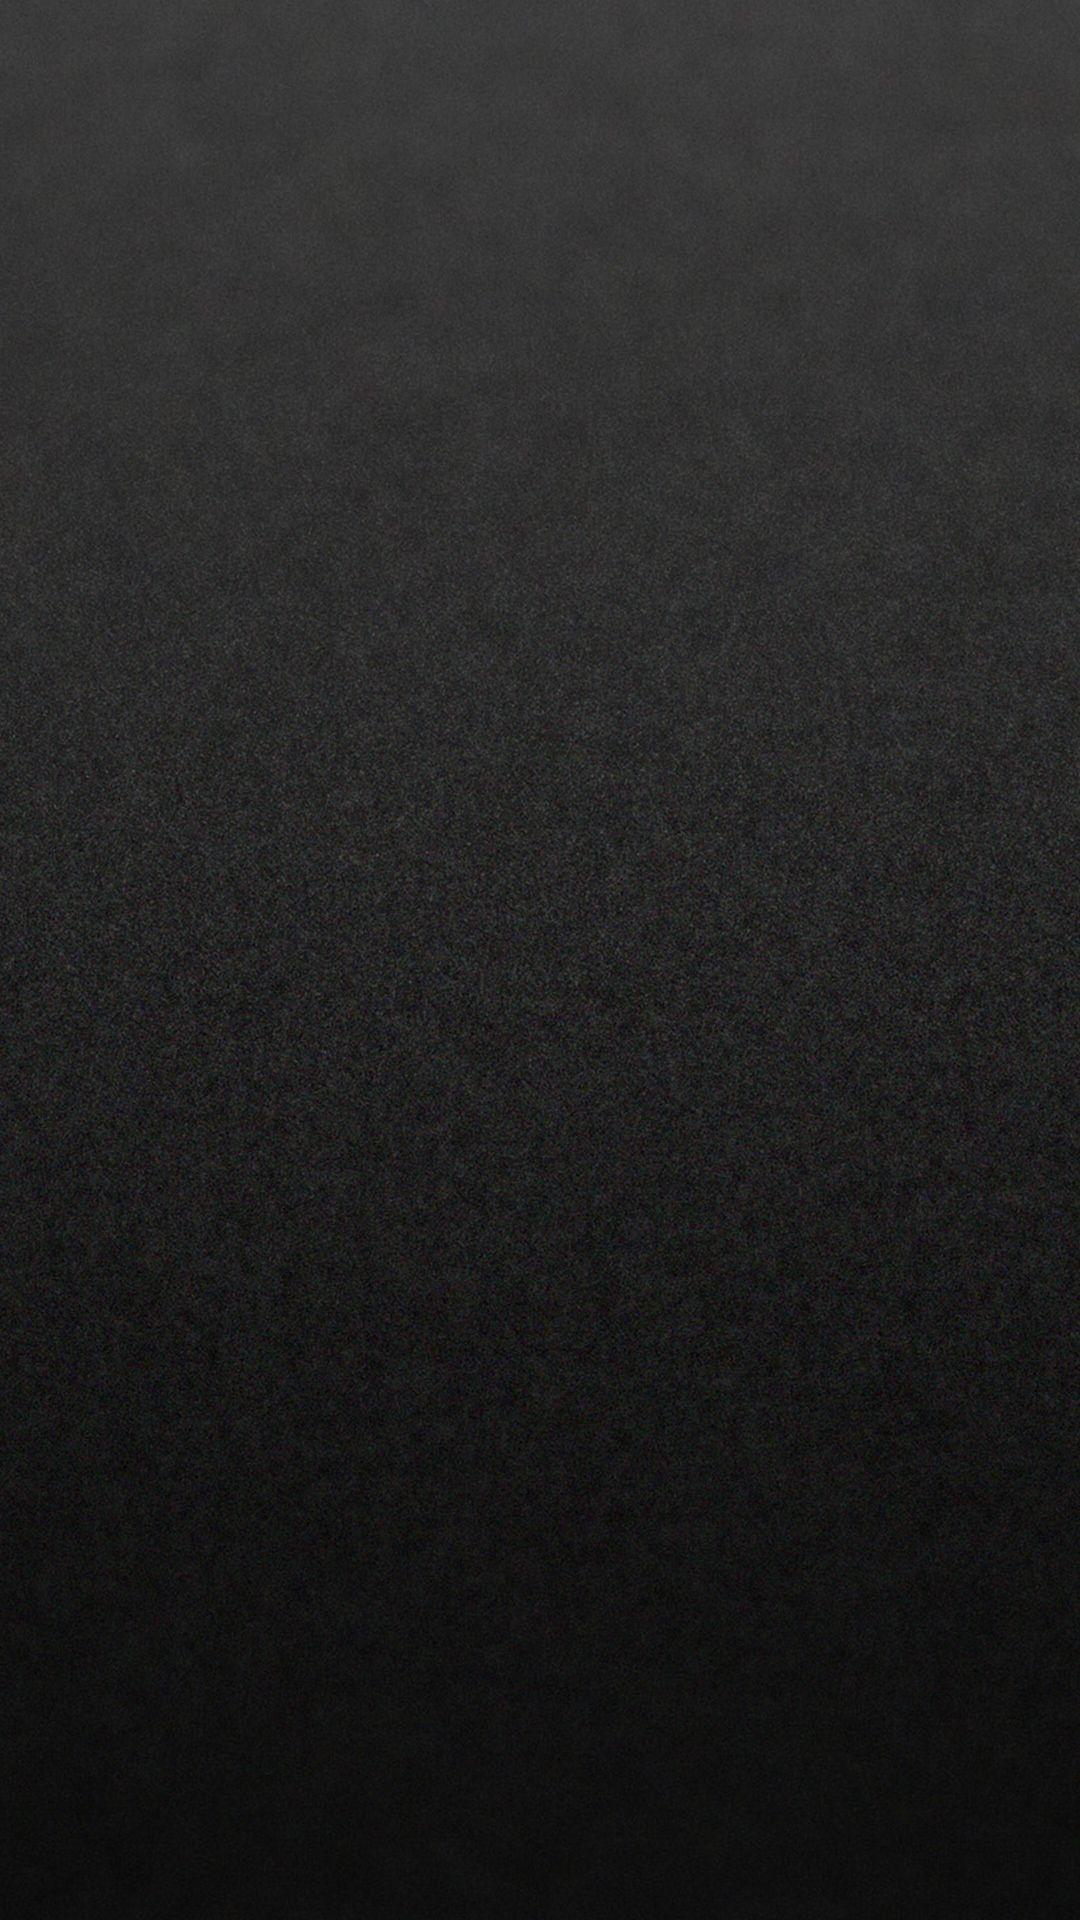 Free Black Carbon Wallpaper, Black Carbon Wallpaper Download - WallpaperUse  - 1